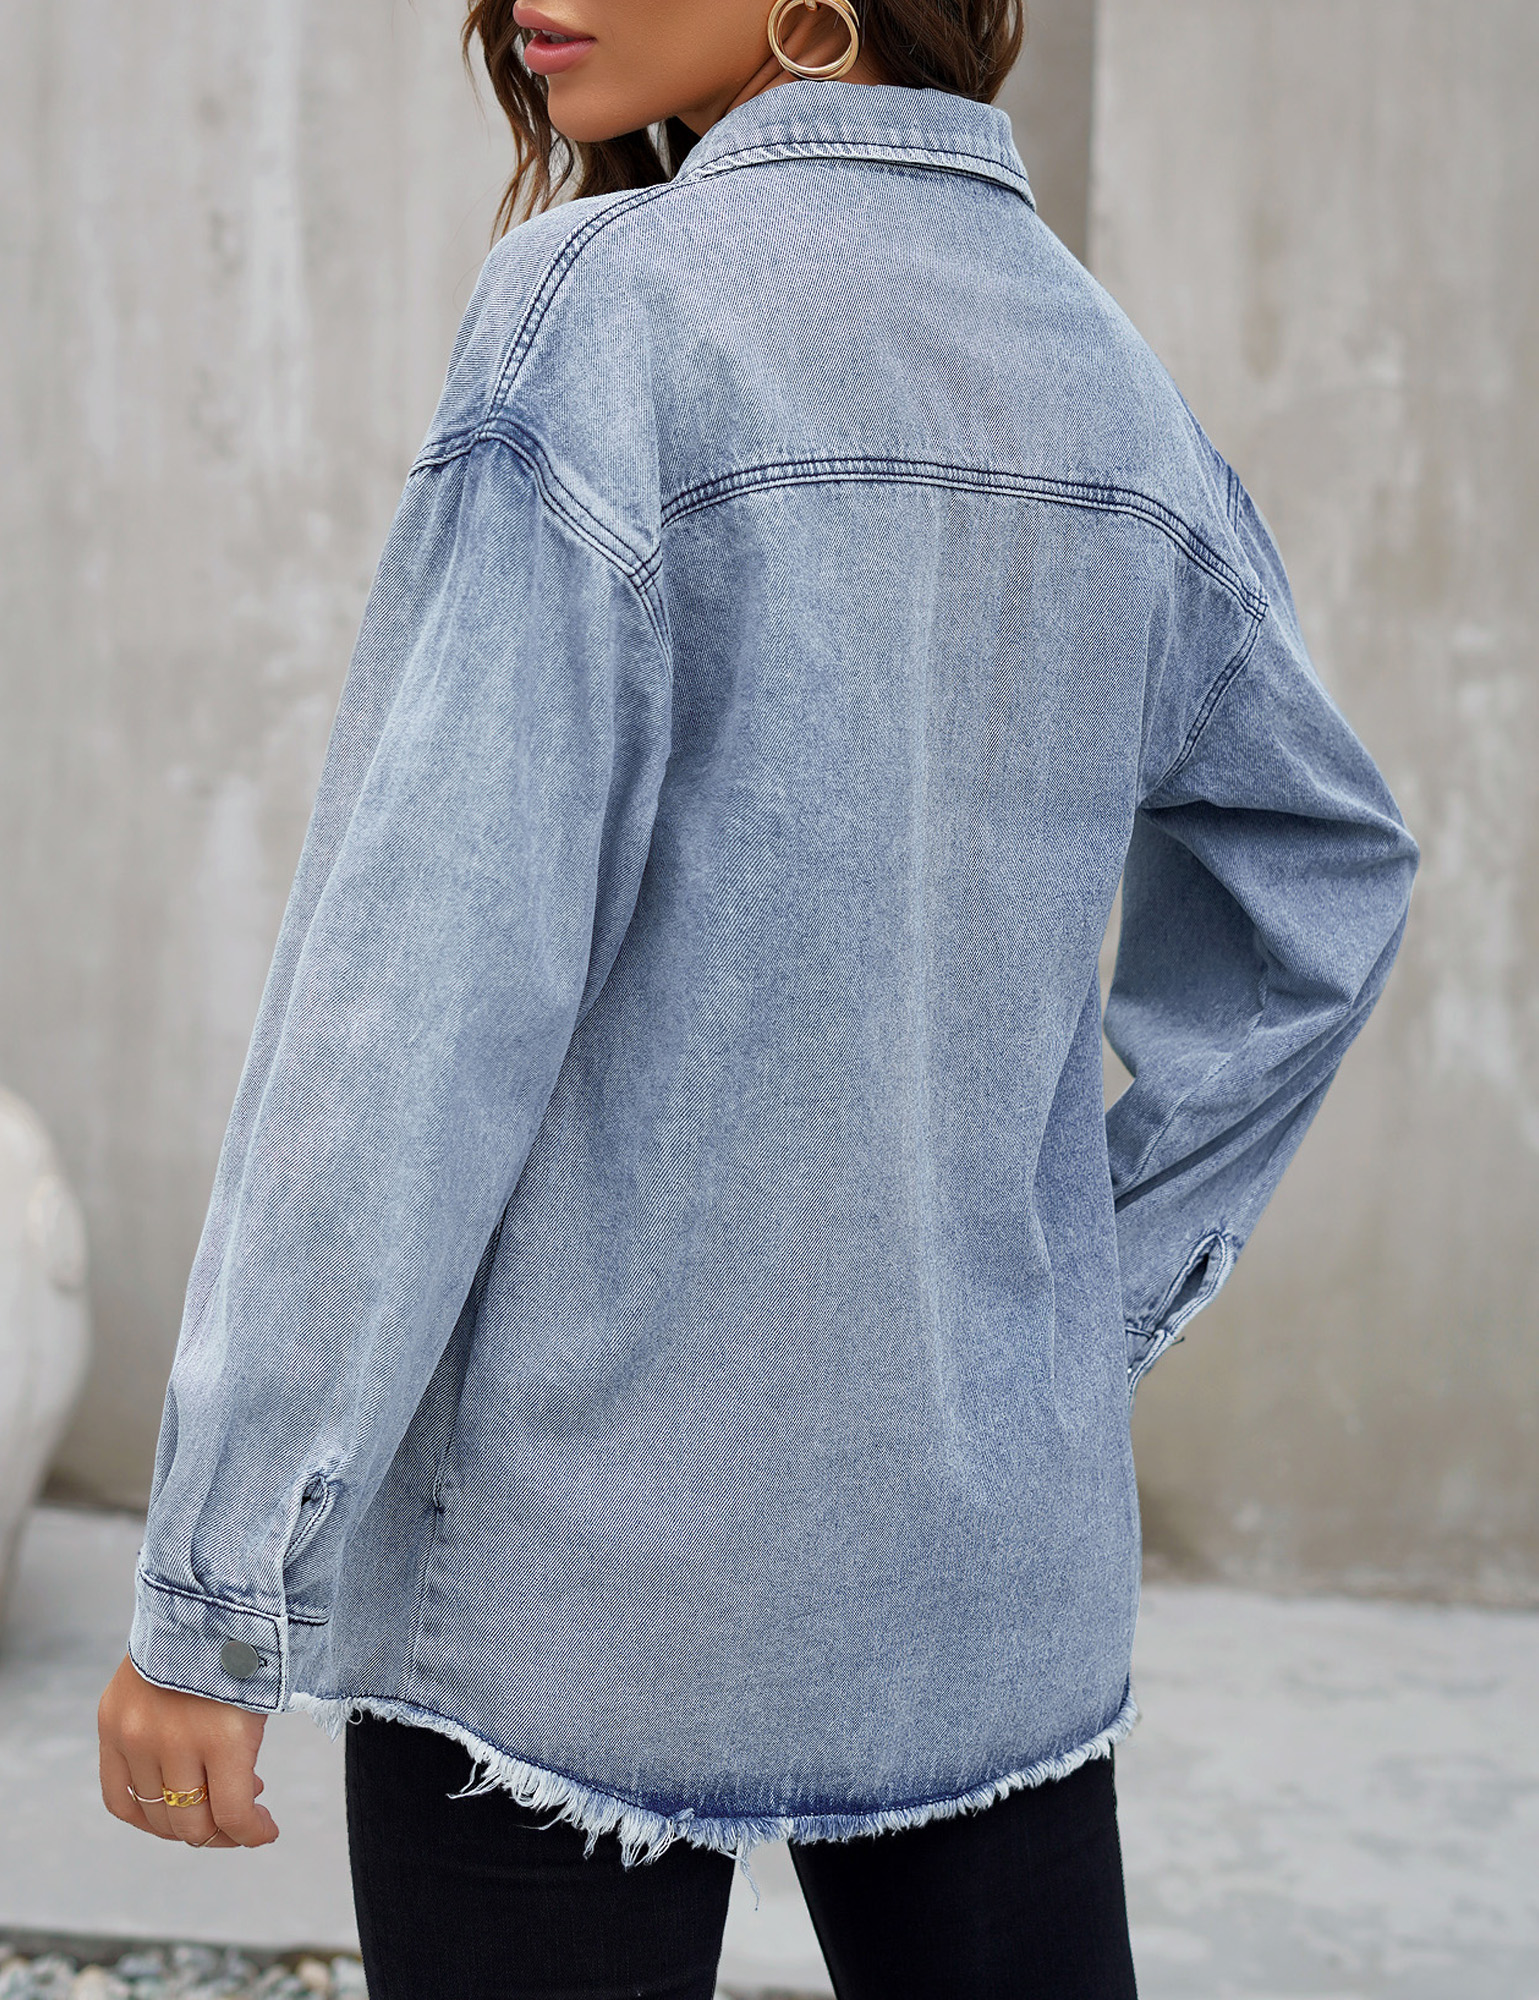 Luvamia Denim Jacket for Women Long Sleeve Boyfriend Jean Jacket Loose Coat, XL, Fit Size 16-18 - image 5 of 7